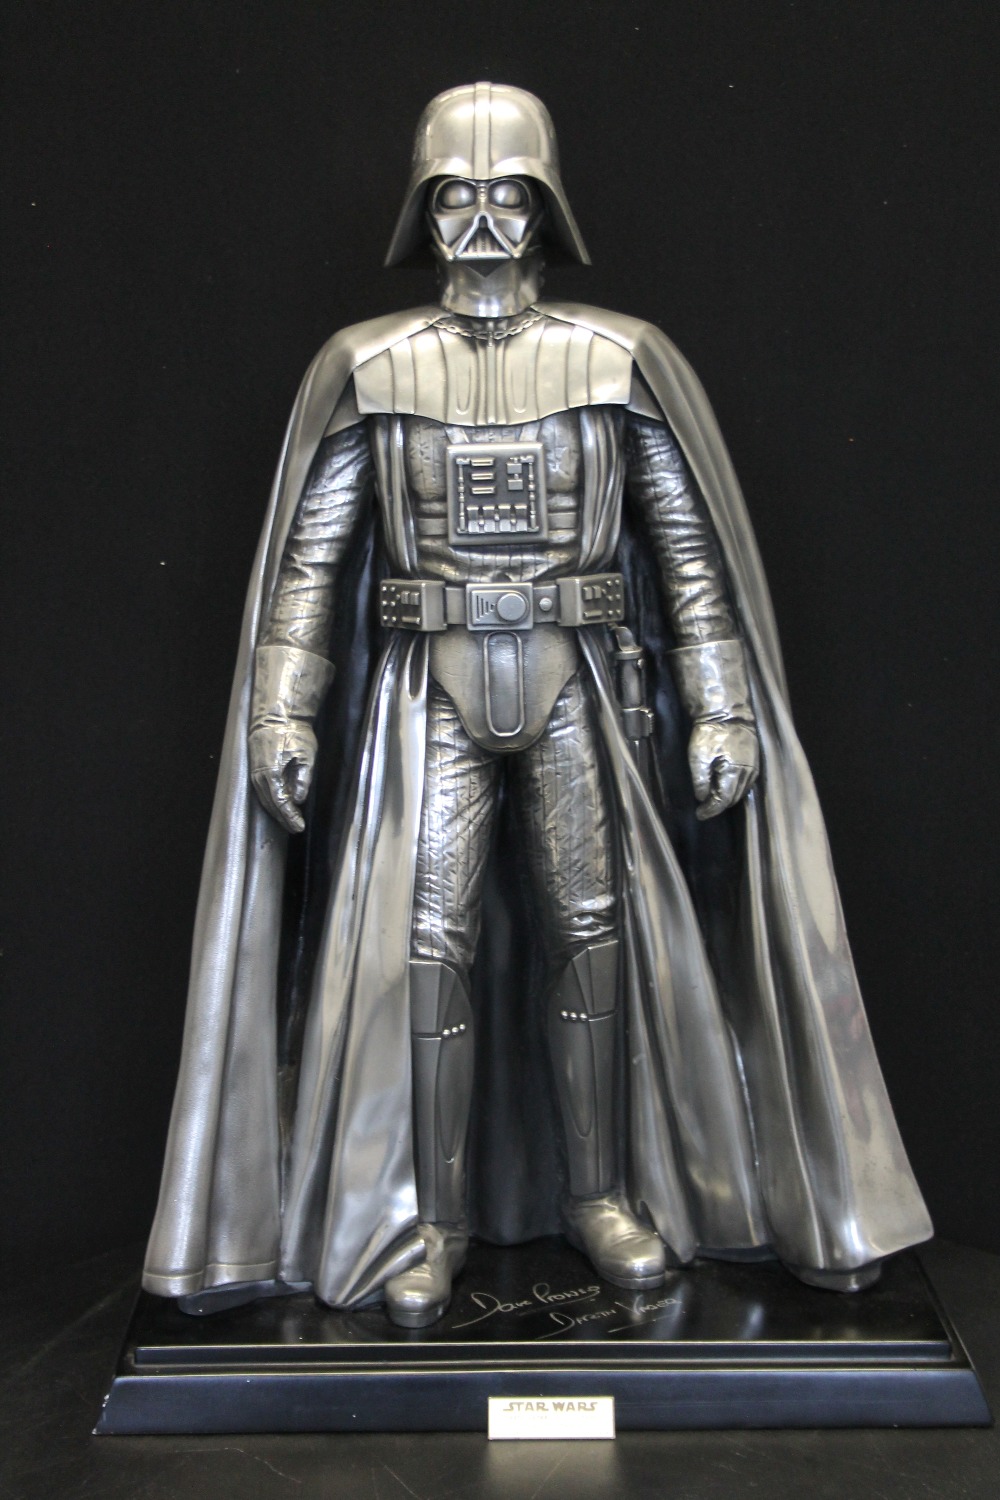 STAR WARS SIGNED SCULPTURE - Darth Vader metallic sculpture by Compulsion Gallery,